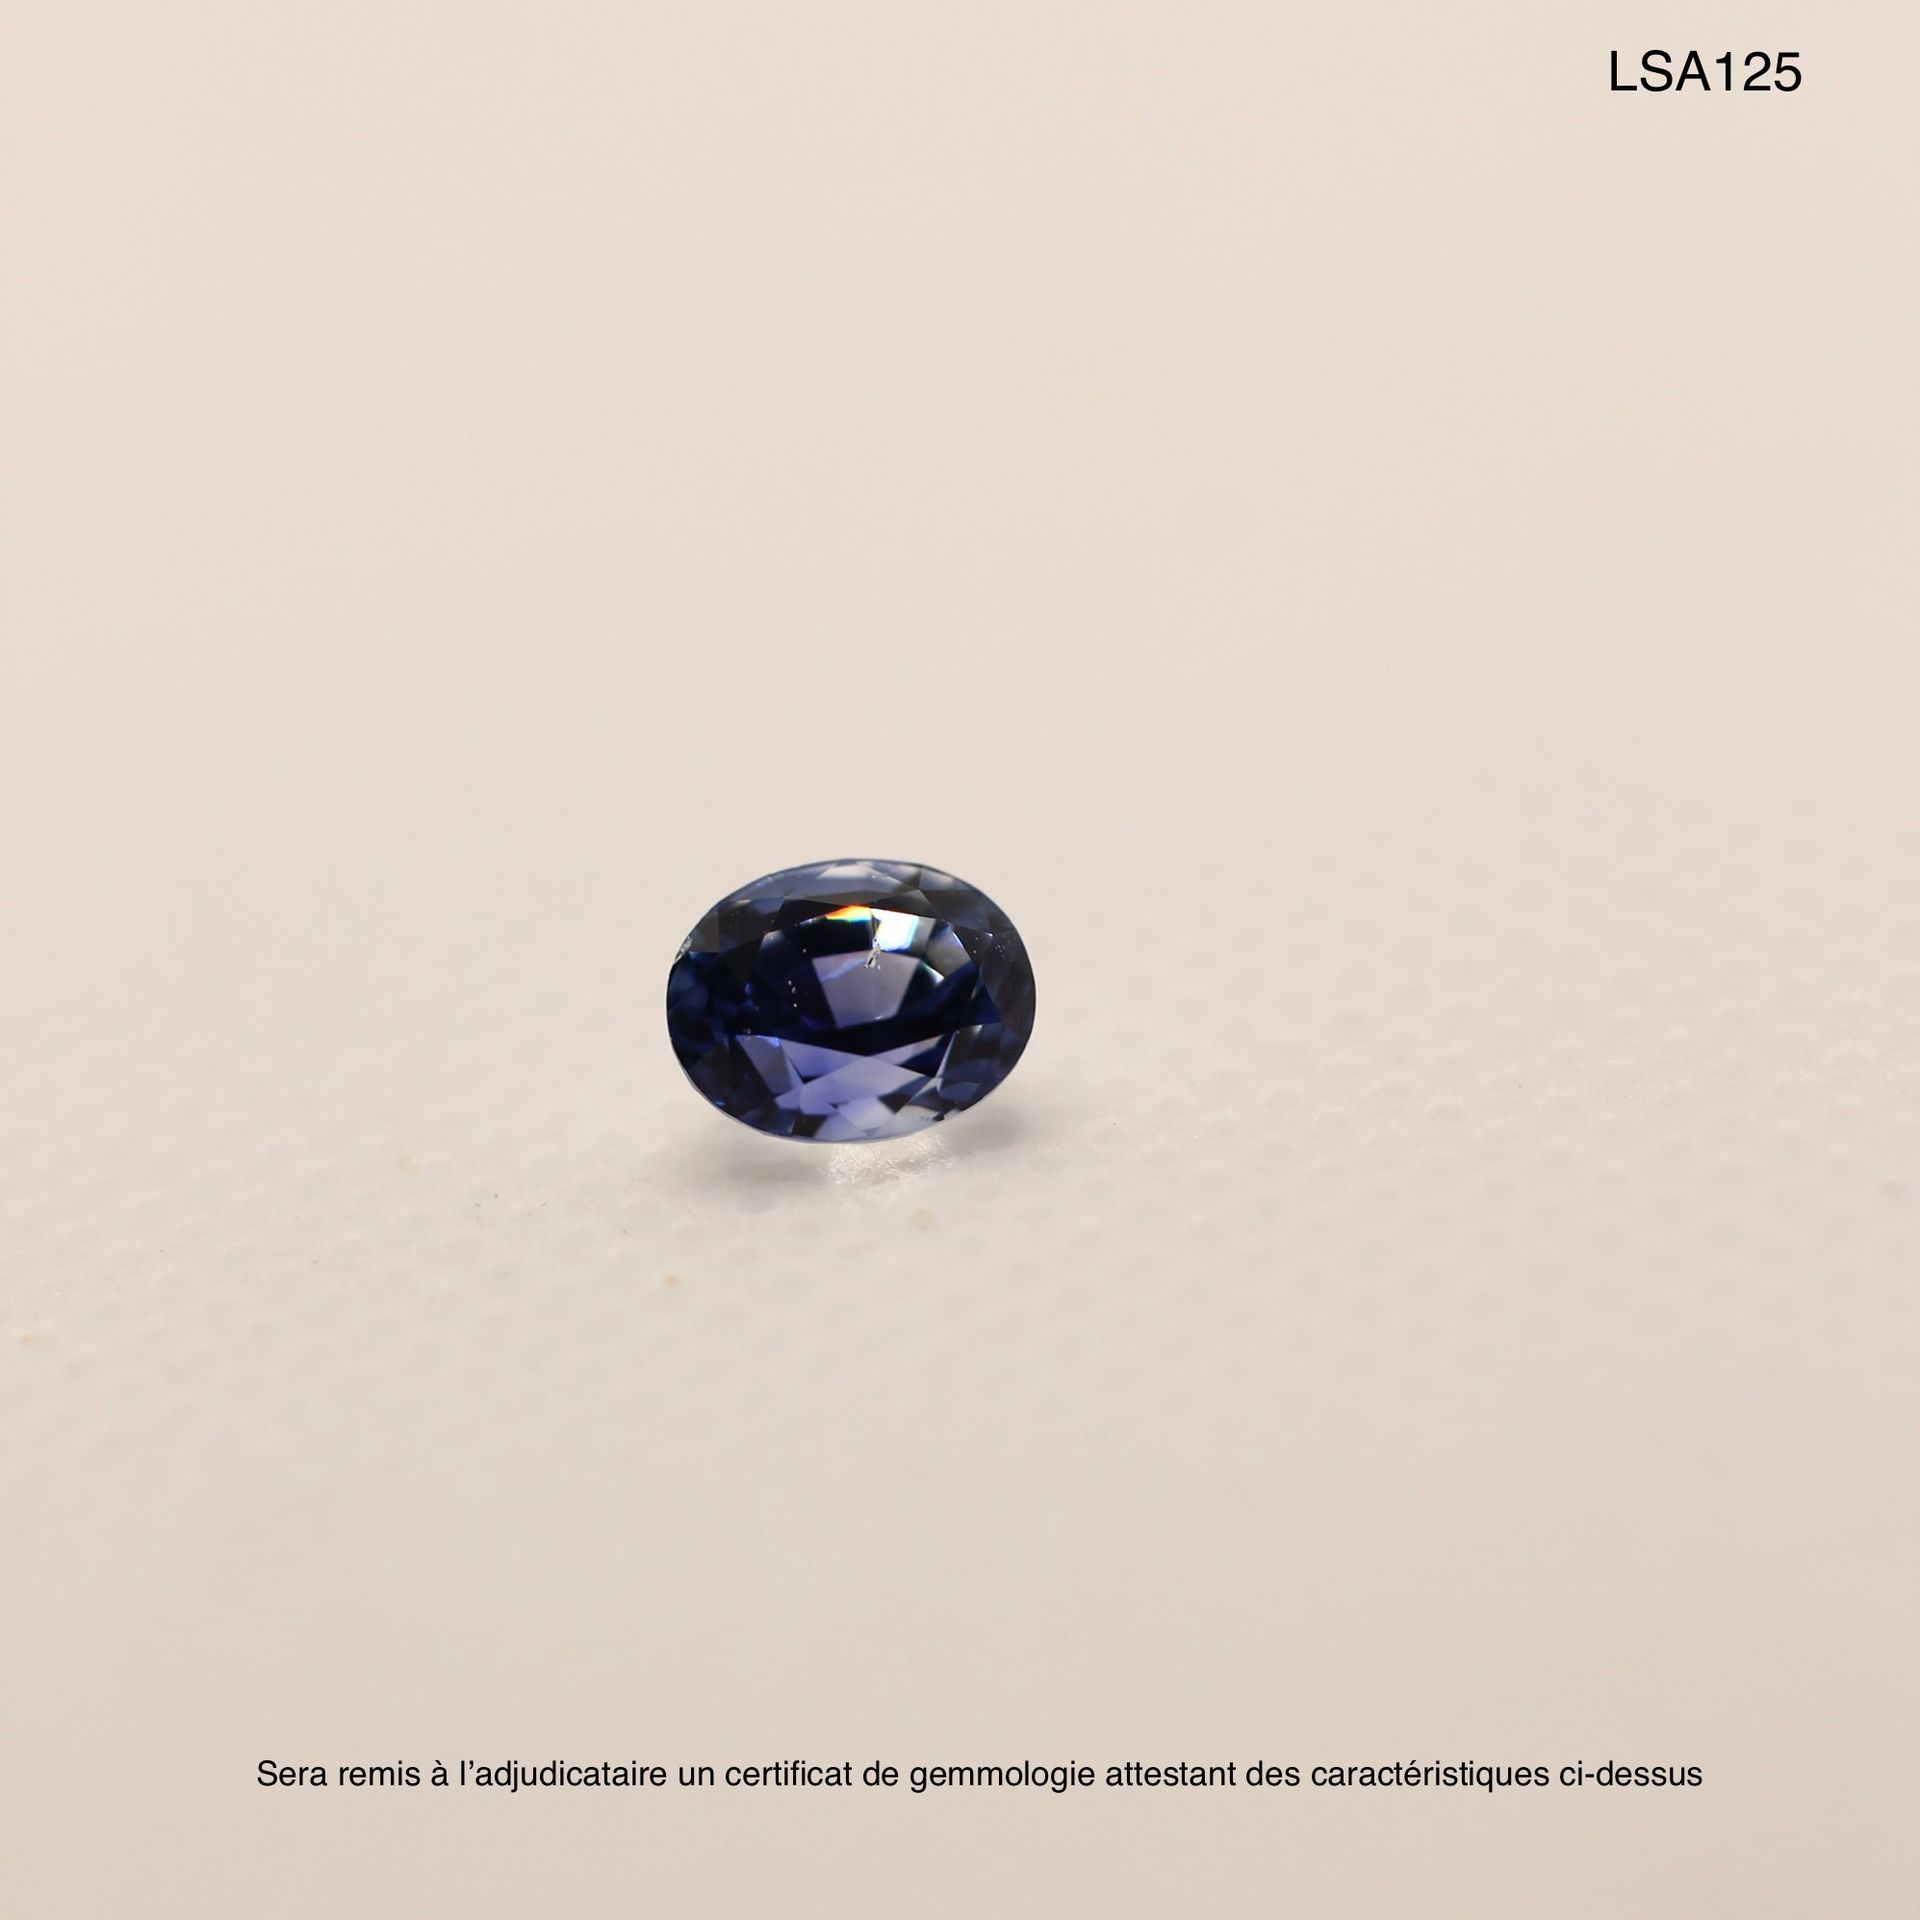 SAPHIRS TAILLÉS 拍品编号：LSA125

原产地: 马达加斯加

治疗: Ø

颜色：蓝色

形状: 椭圆形

尺寸：6.5mm x 5.2mm&hellip;